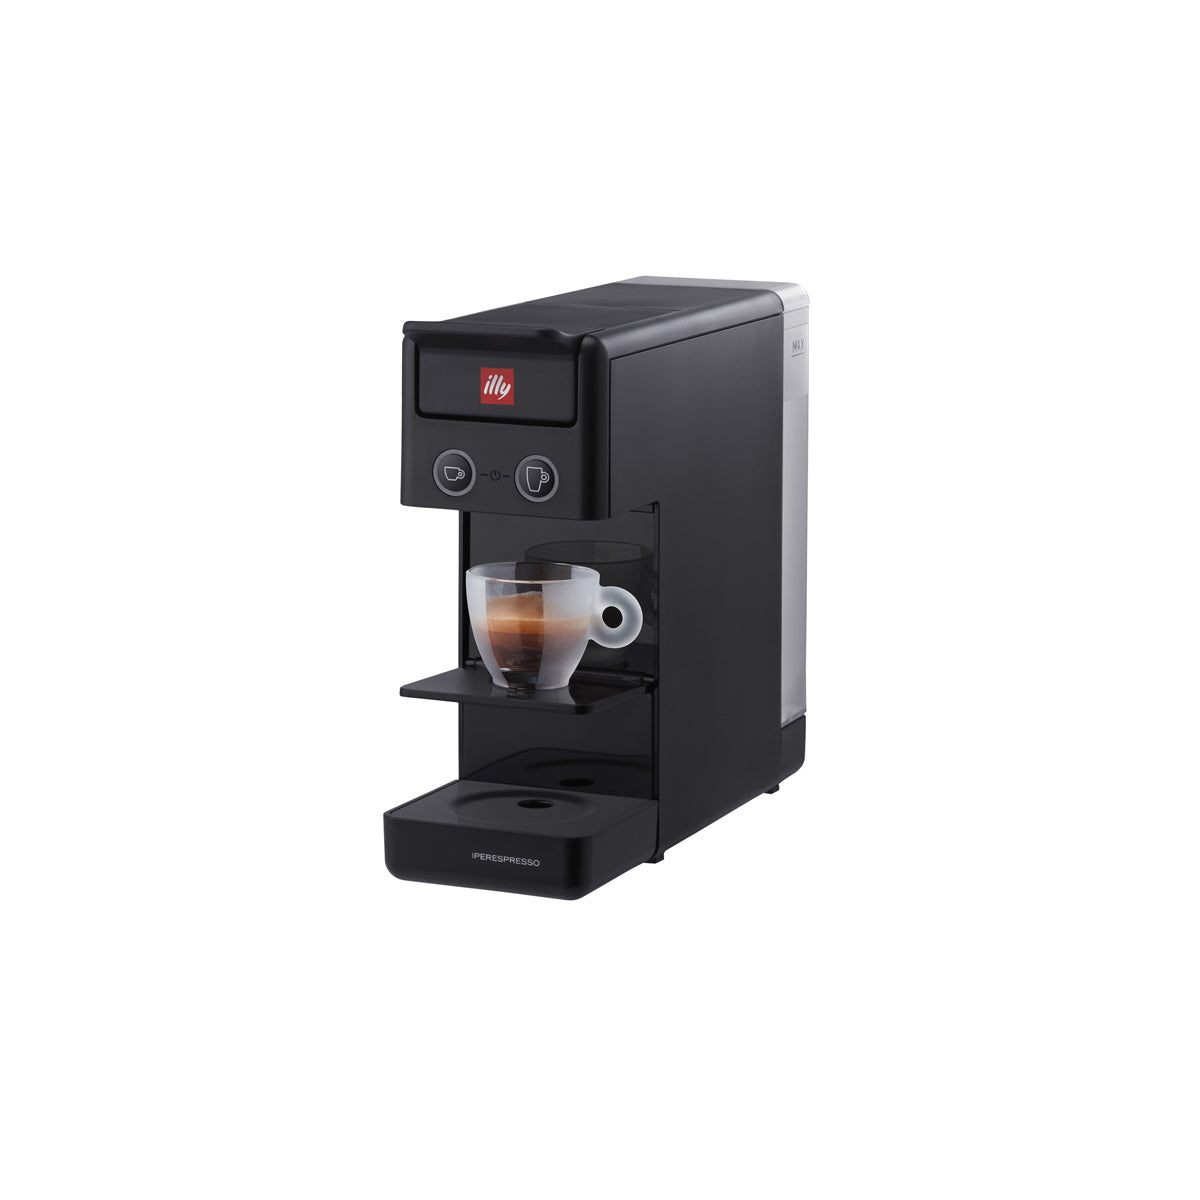 Iperespresso Y3.3 Home Espresso Capsule Coffee Machine Black